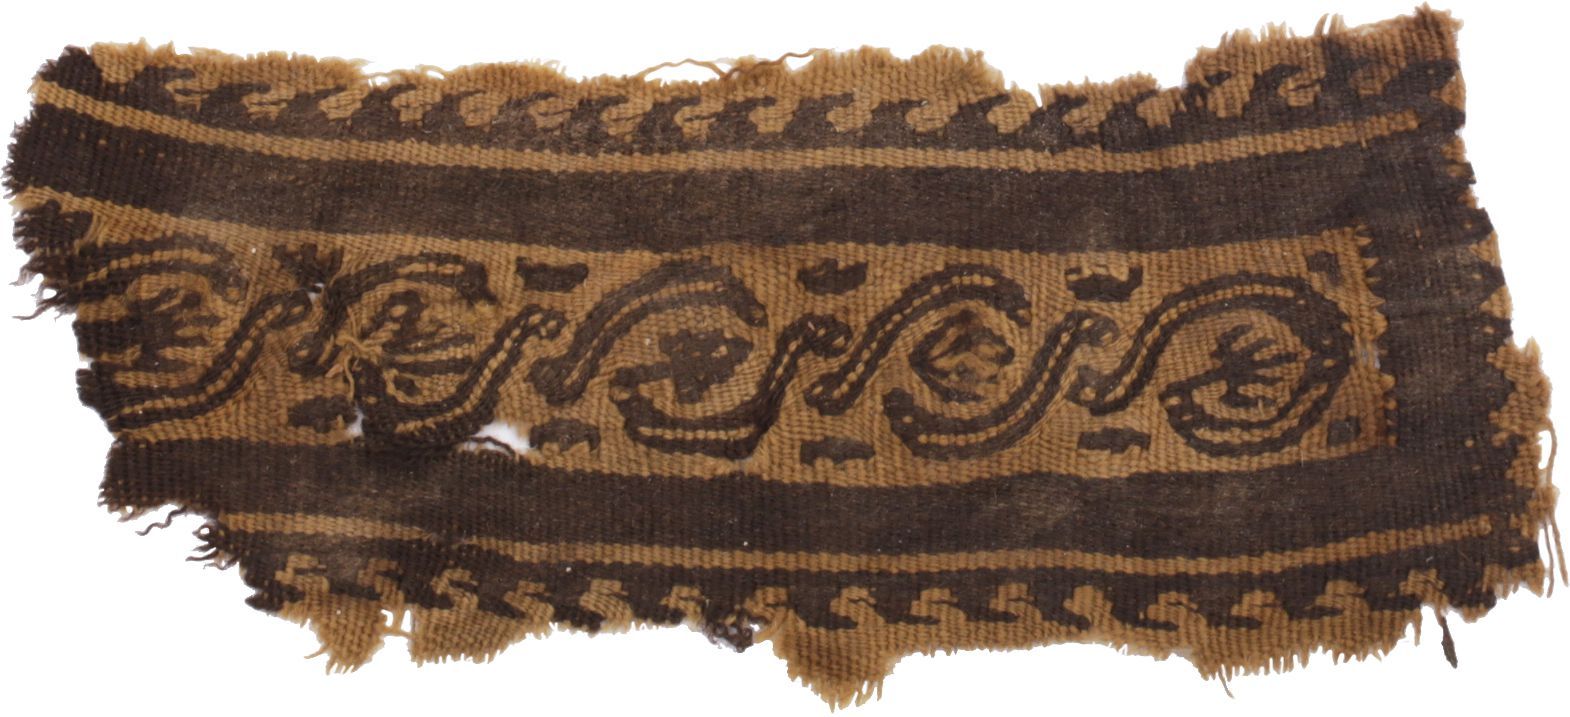 EGYPTIAN COPTIC CLOTH, 4th-5th CENTURY AD - Fagan Arms